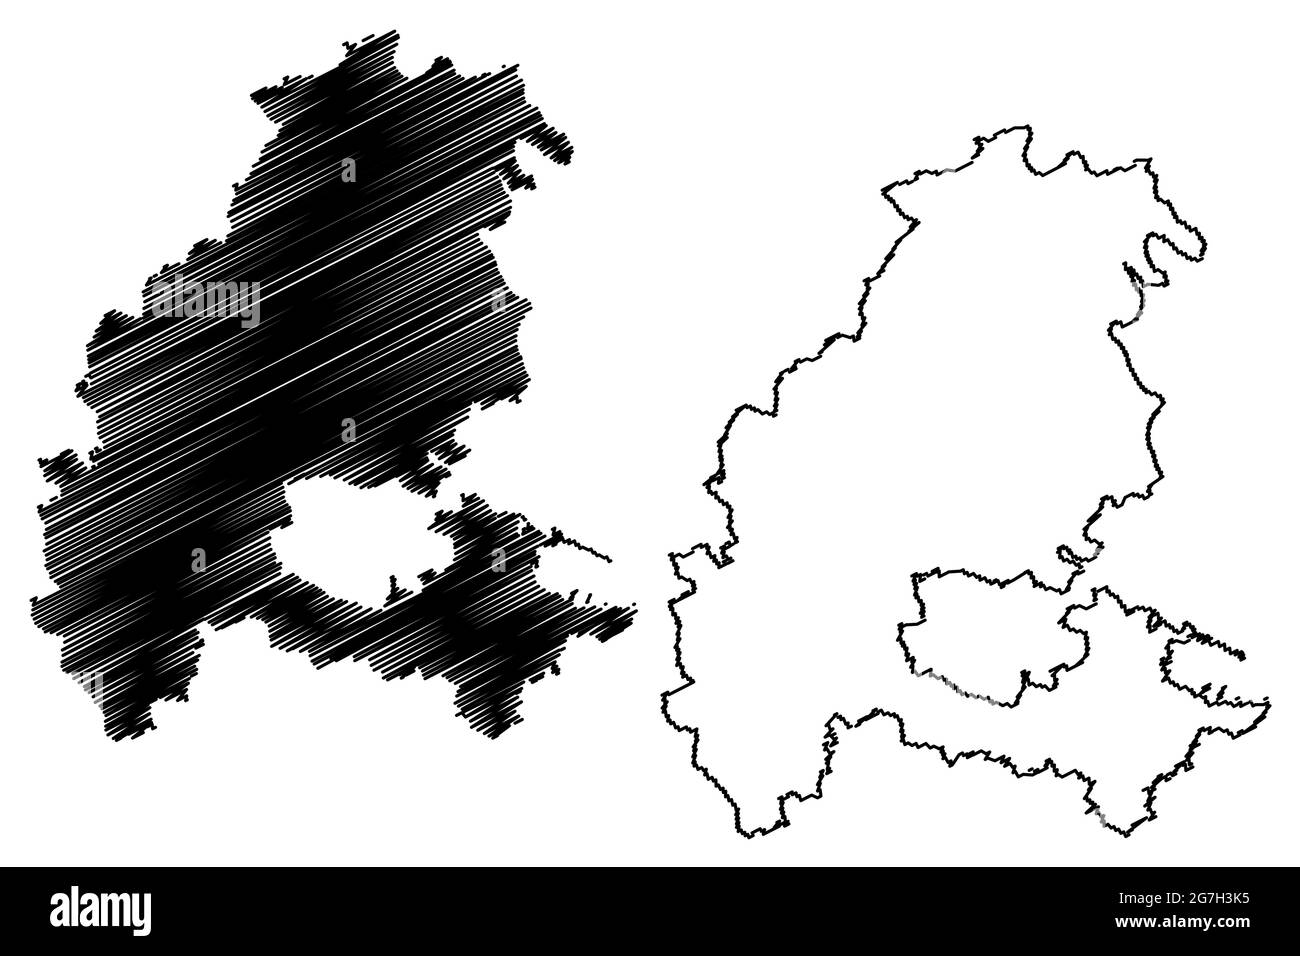 Distretto di Kassel (Repubblica federale di Germania, distretto rurale regione di Kassel, stato di Assia, Assia, Assia) illustrazione vettoriale mappa, abbozzare schizzo S Illustrazione Vettoriale